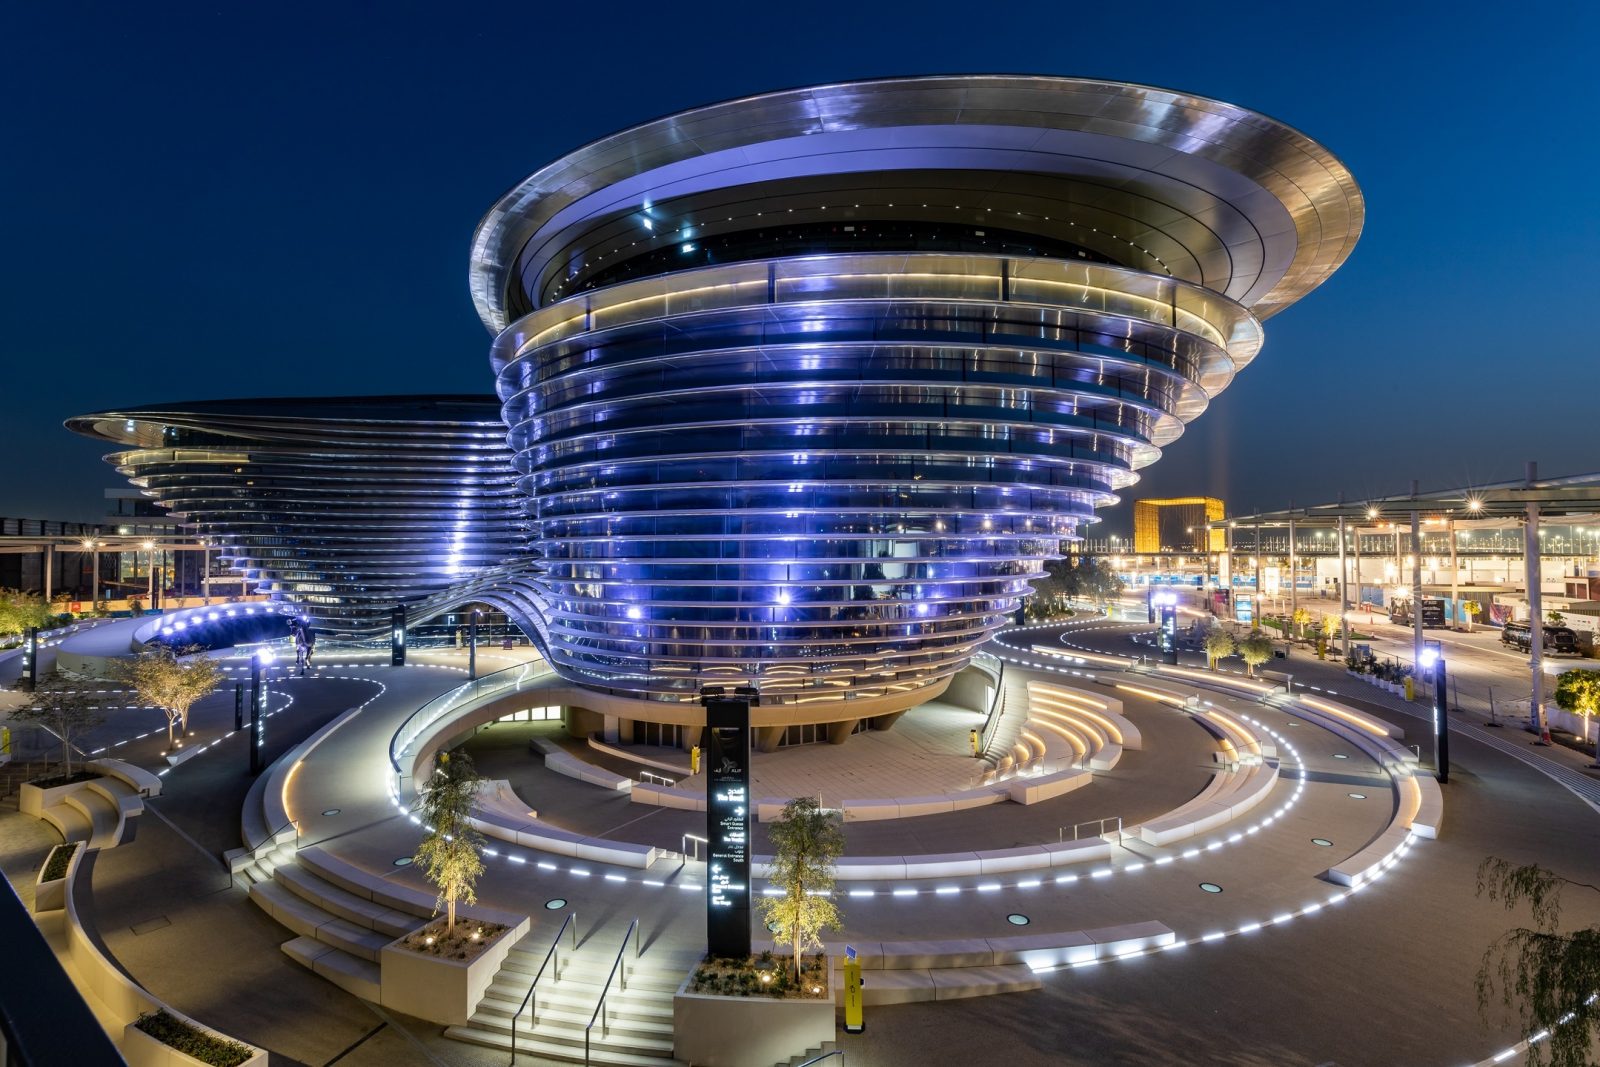 The Mobility Pavilion for 2020 Dubai Expo